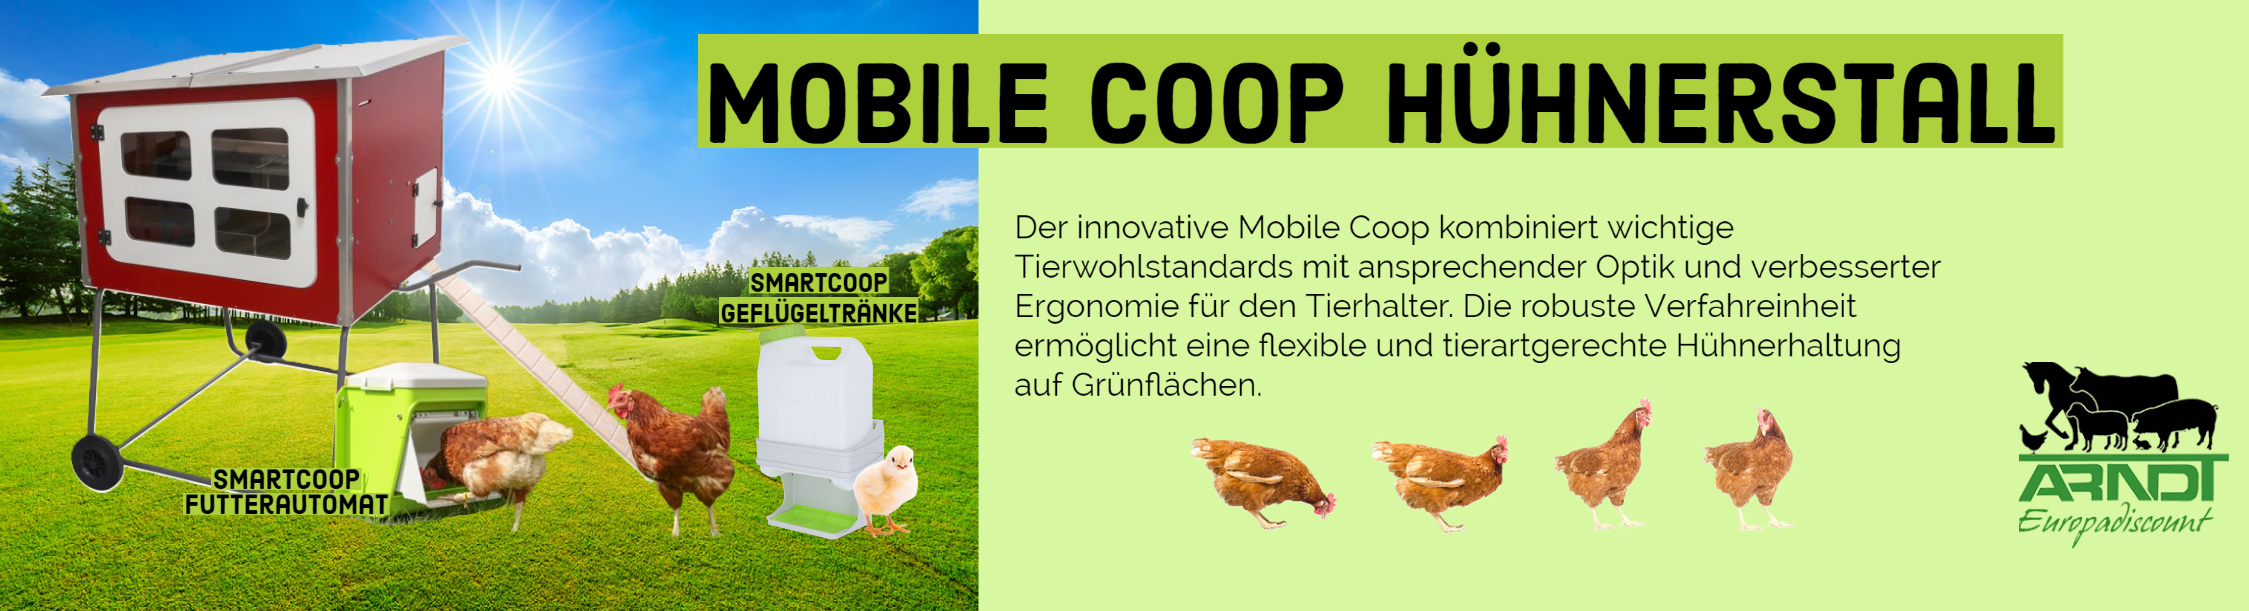 MobileCoop Hühnerstall